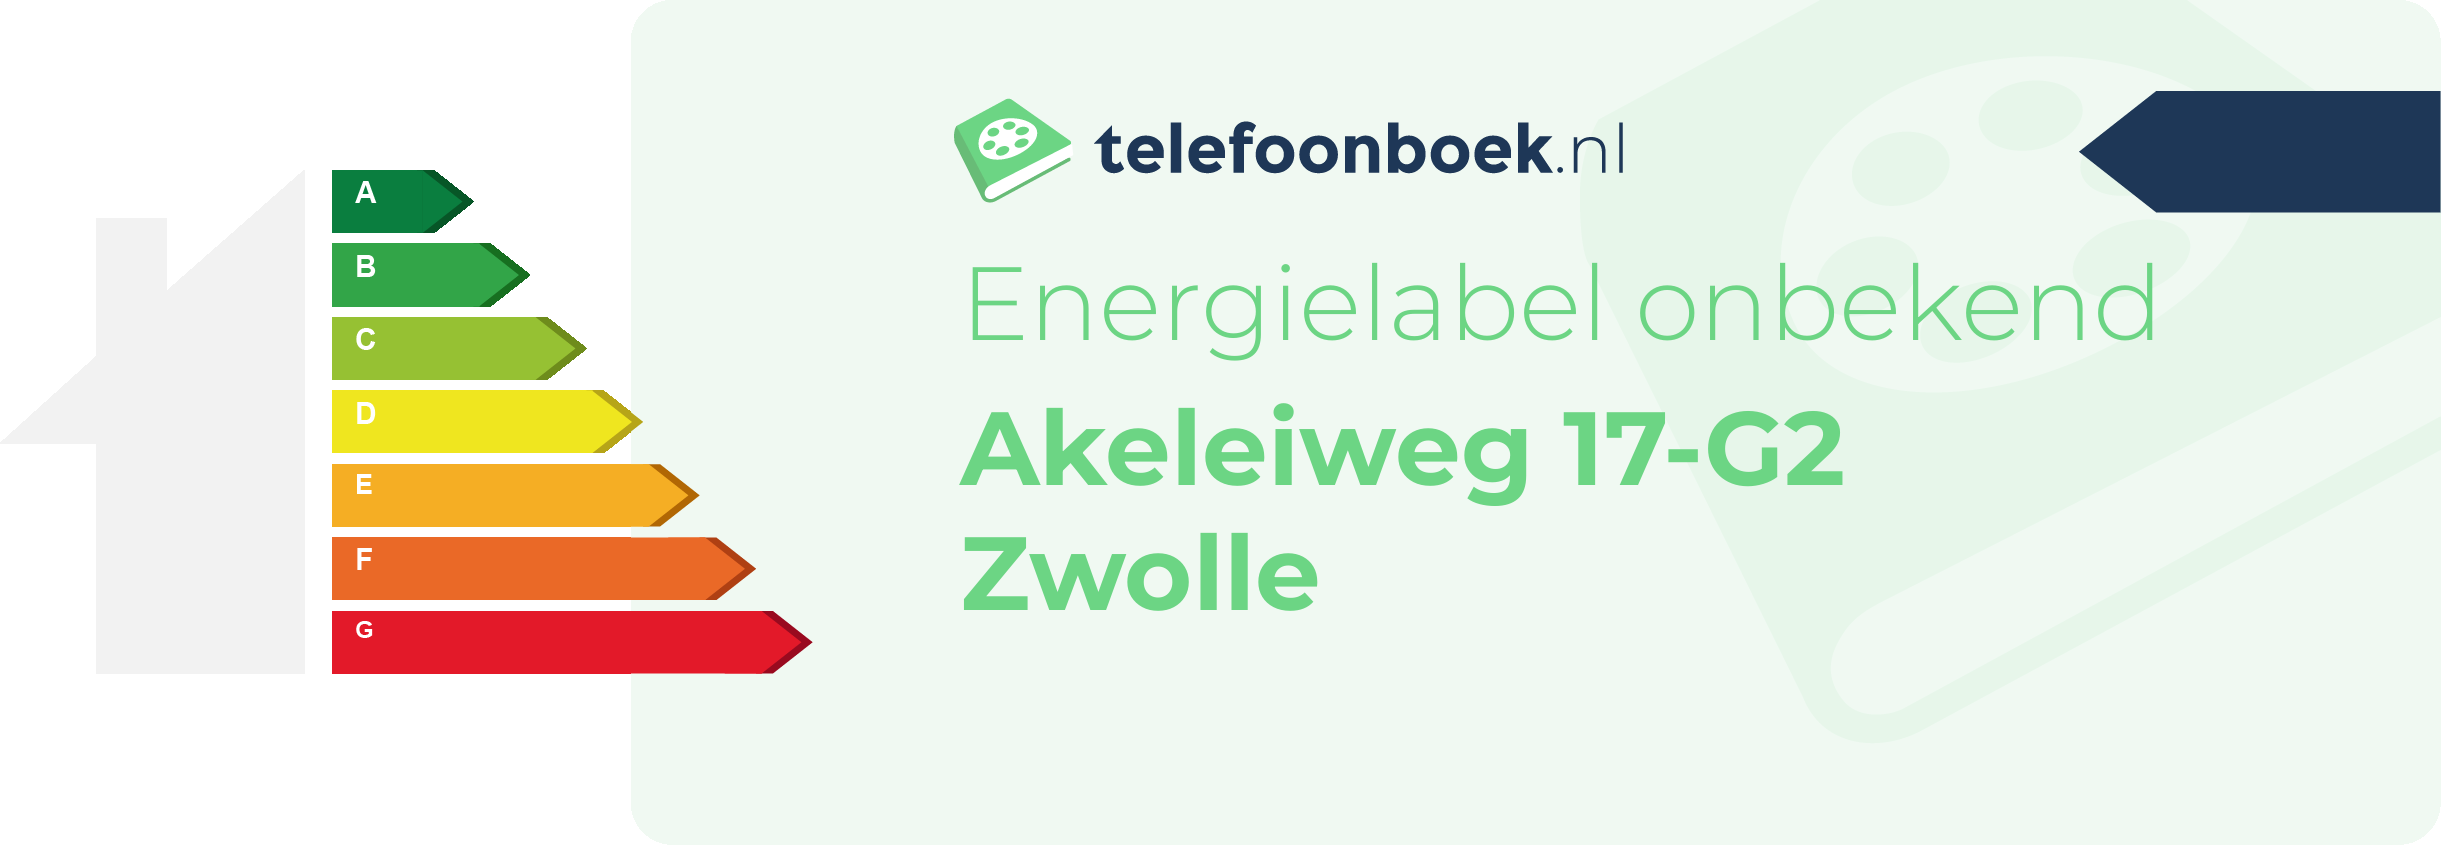 Energielabel Akeleiweg 17-G2 Zwolle